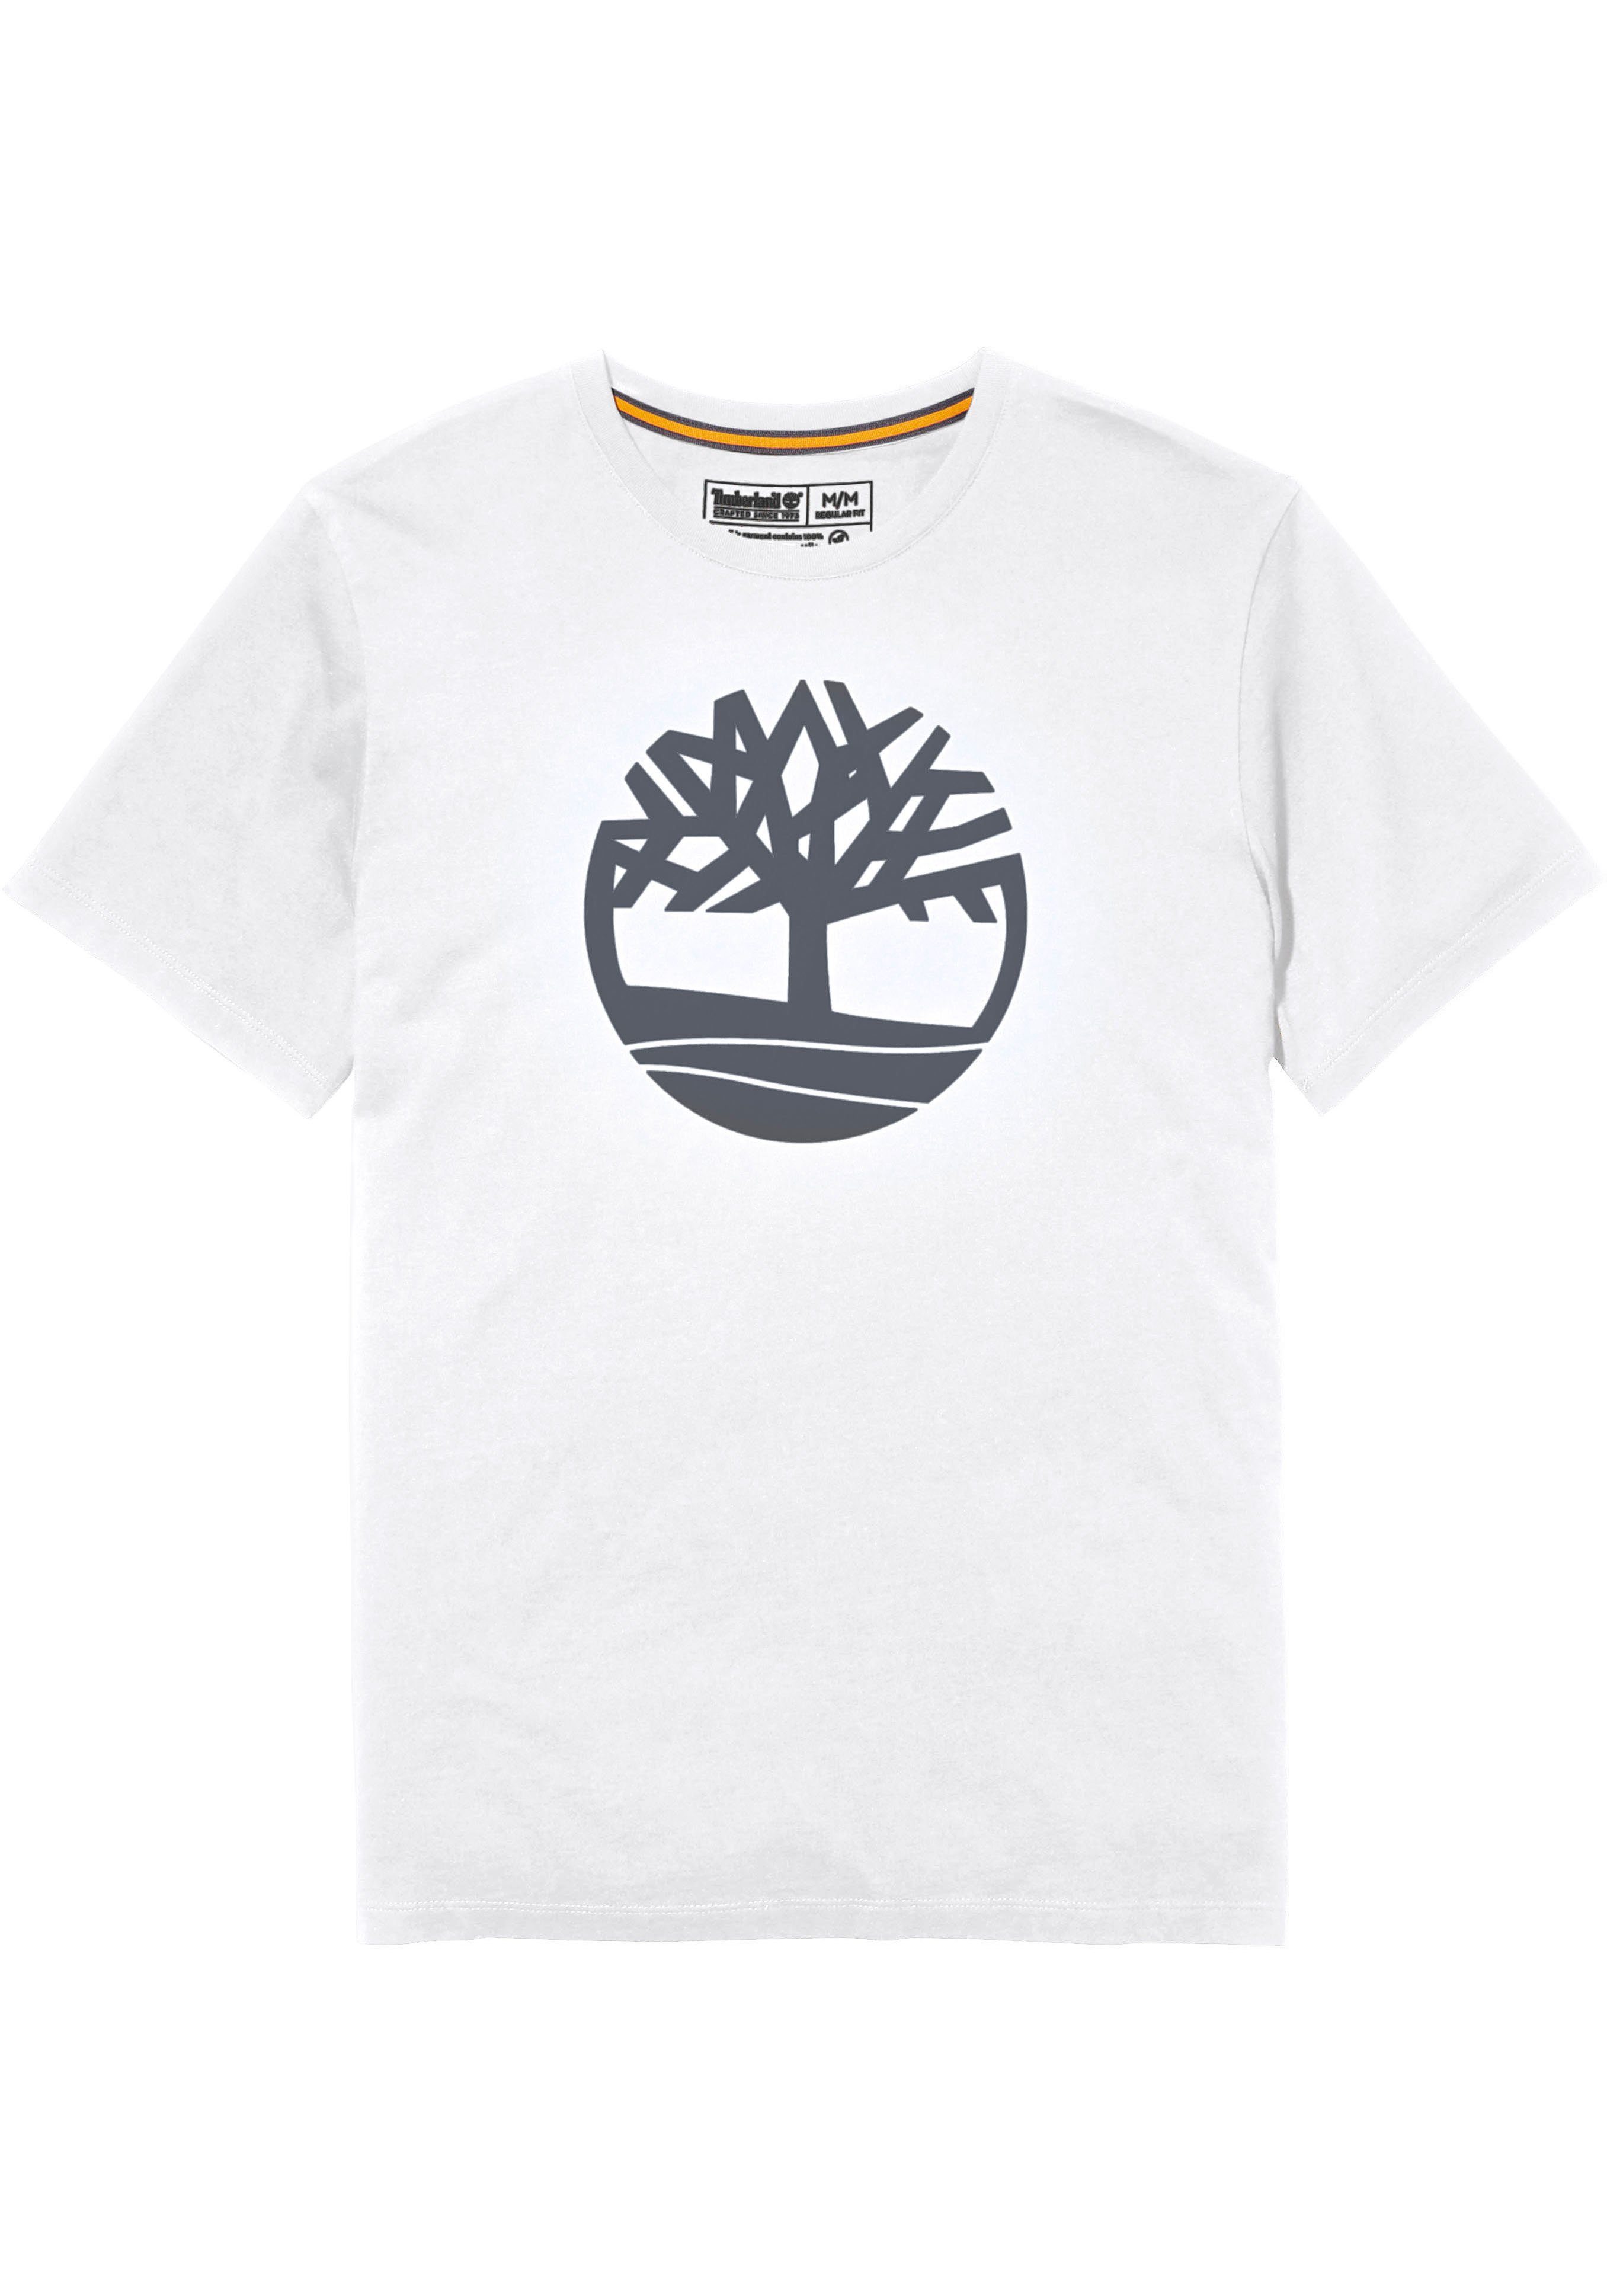 Kennebec Tree Timberland River T-Shirt weiß